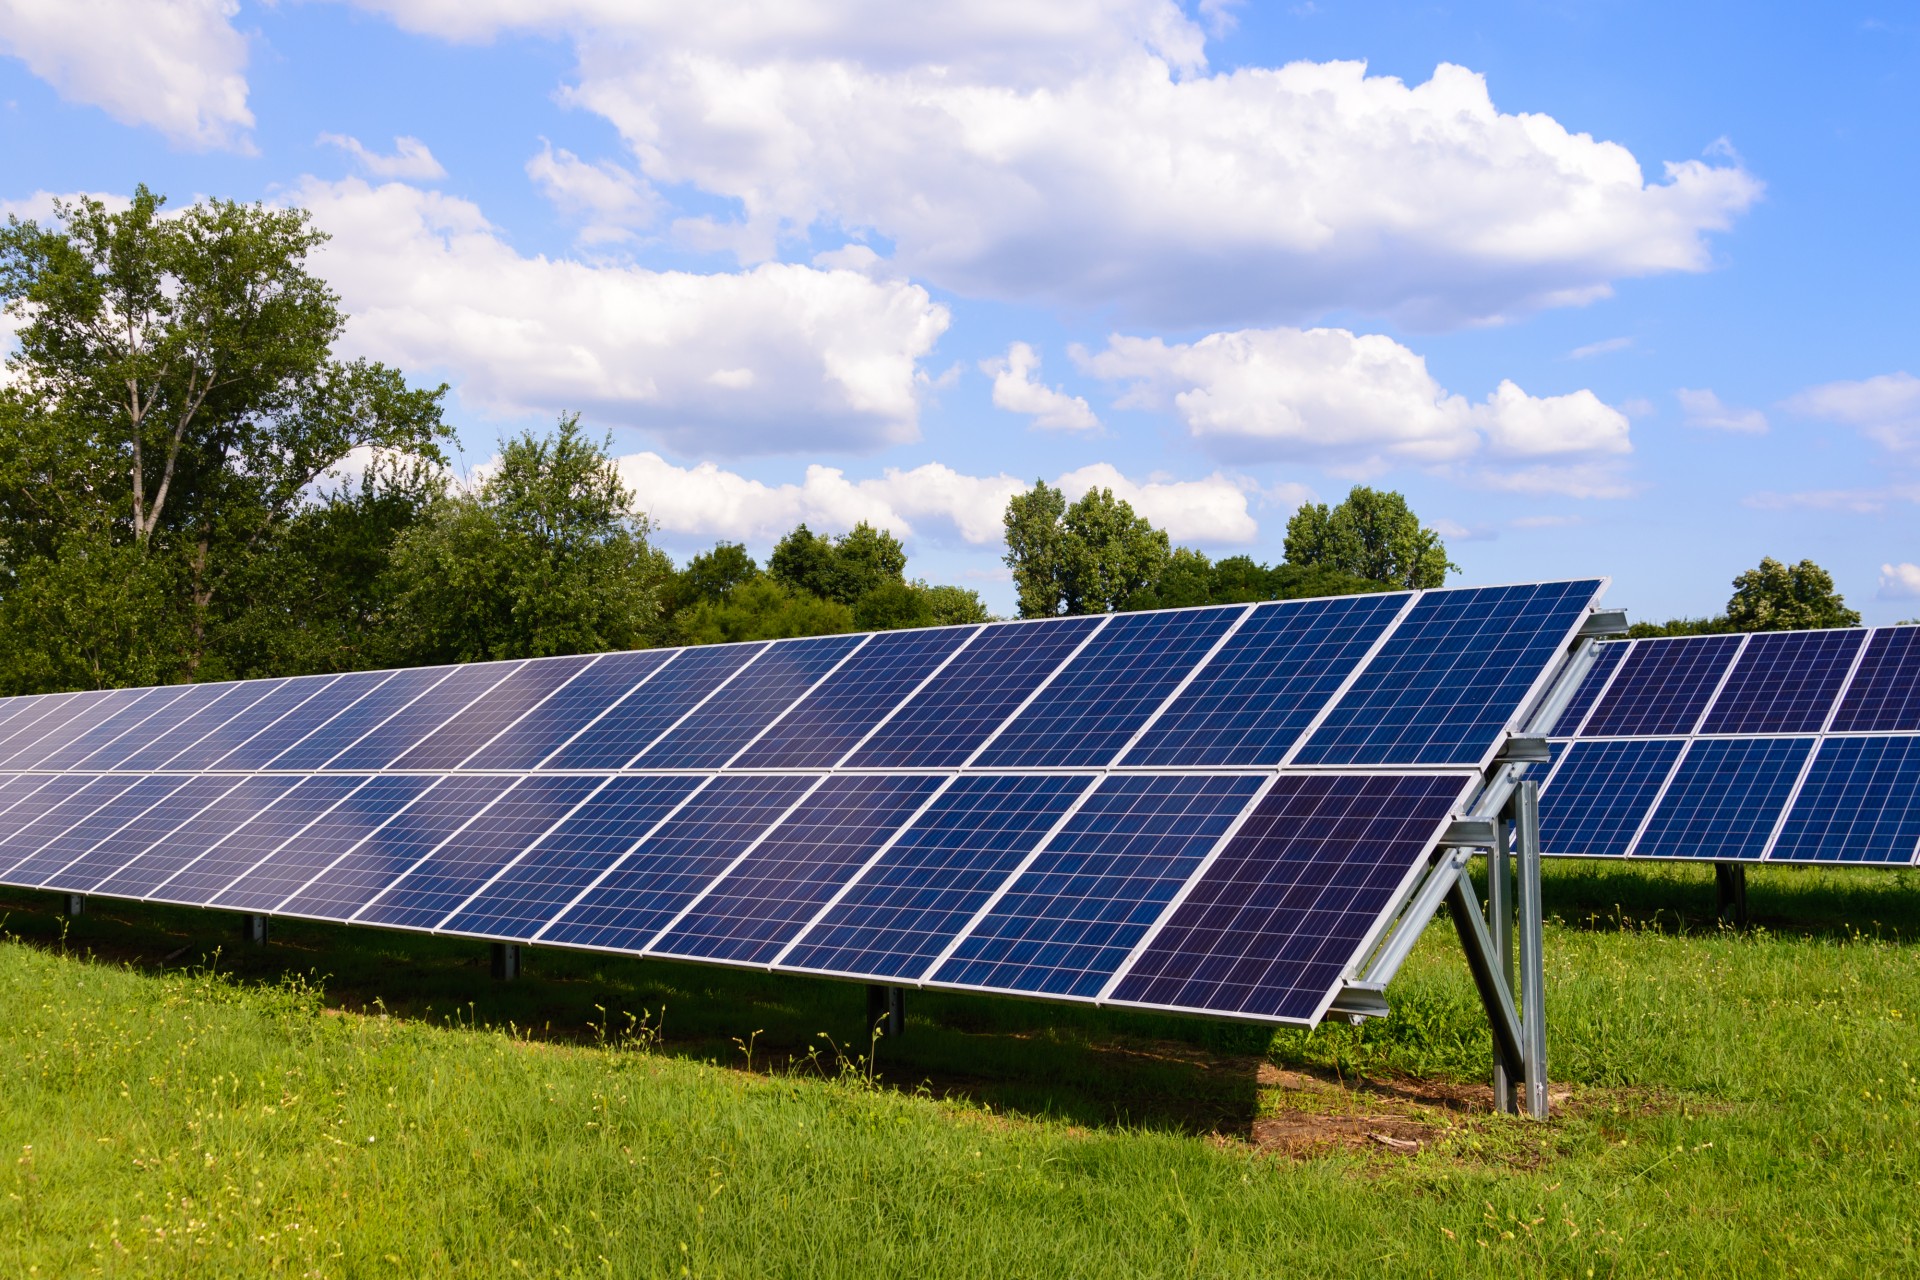 ESC expands offerings in solar energy market